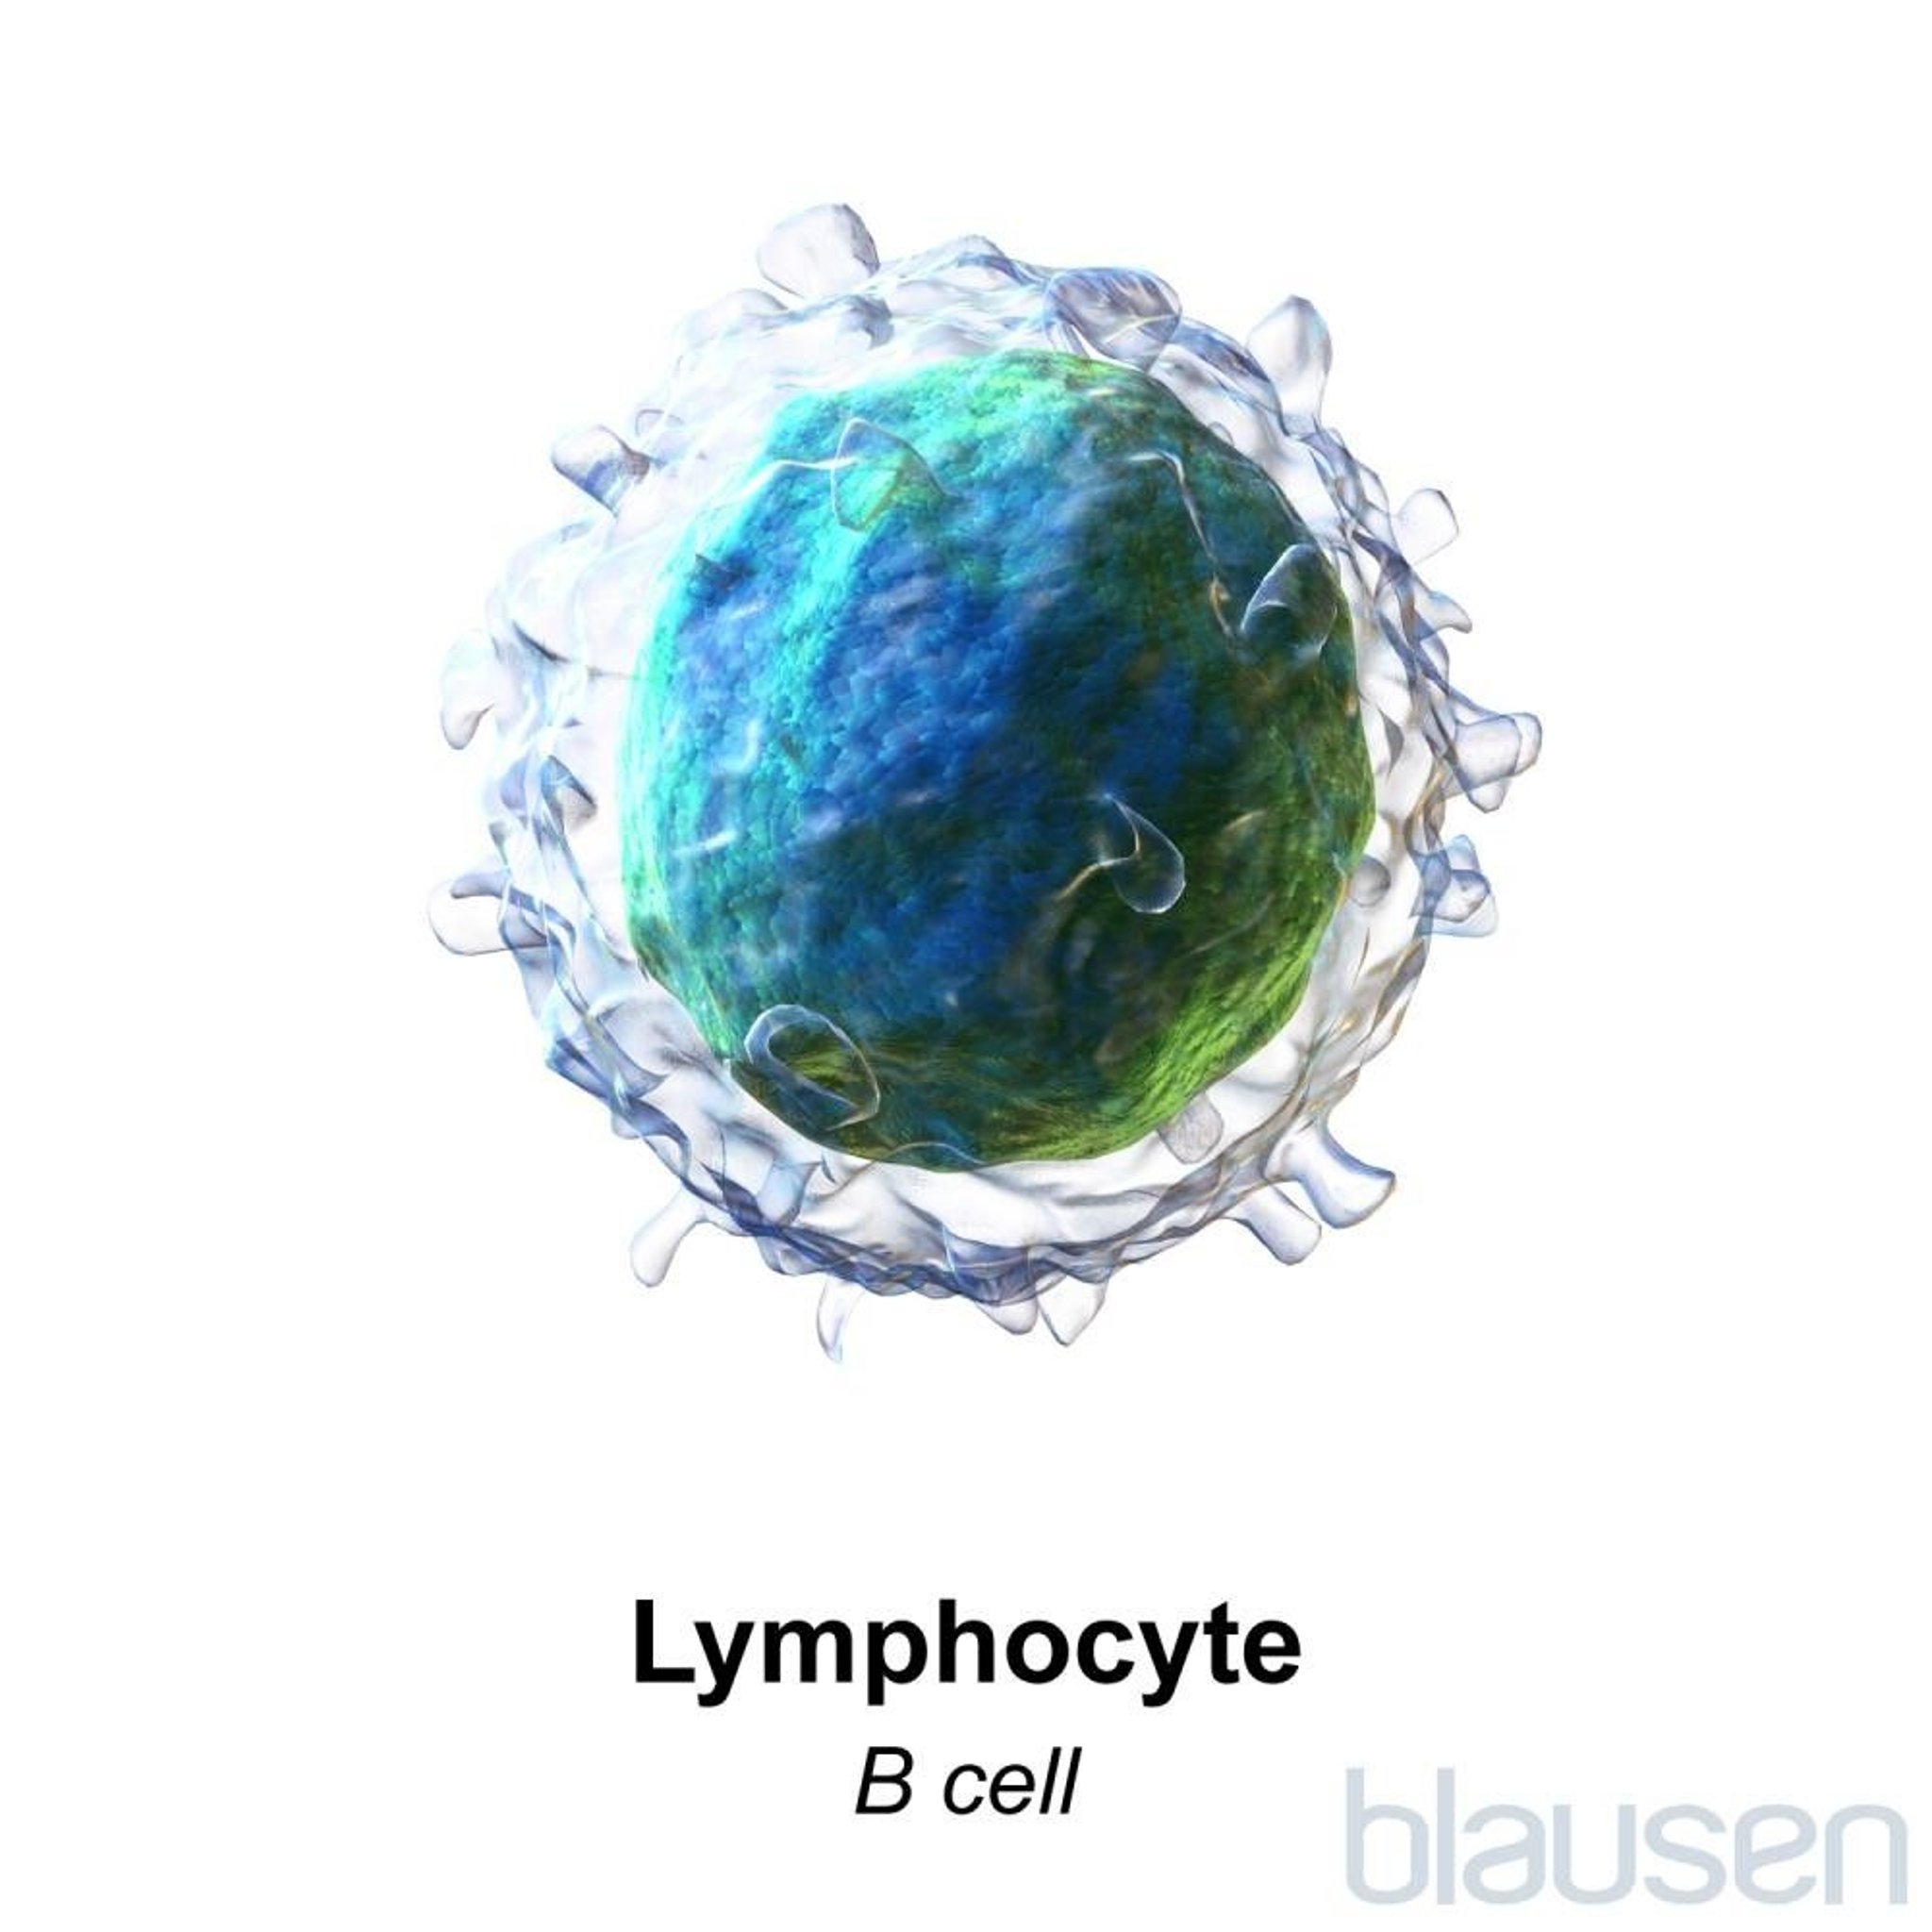 Lymphocyte: B Cell